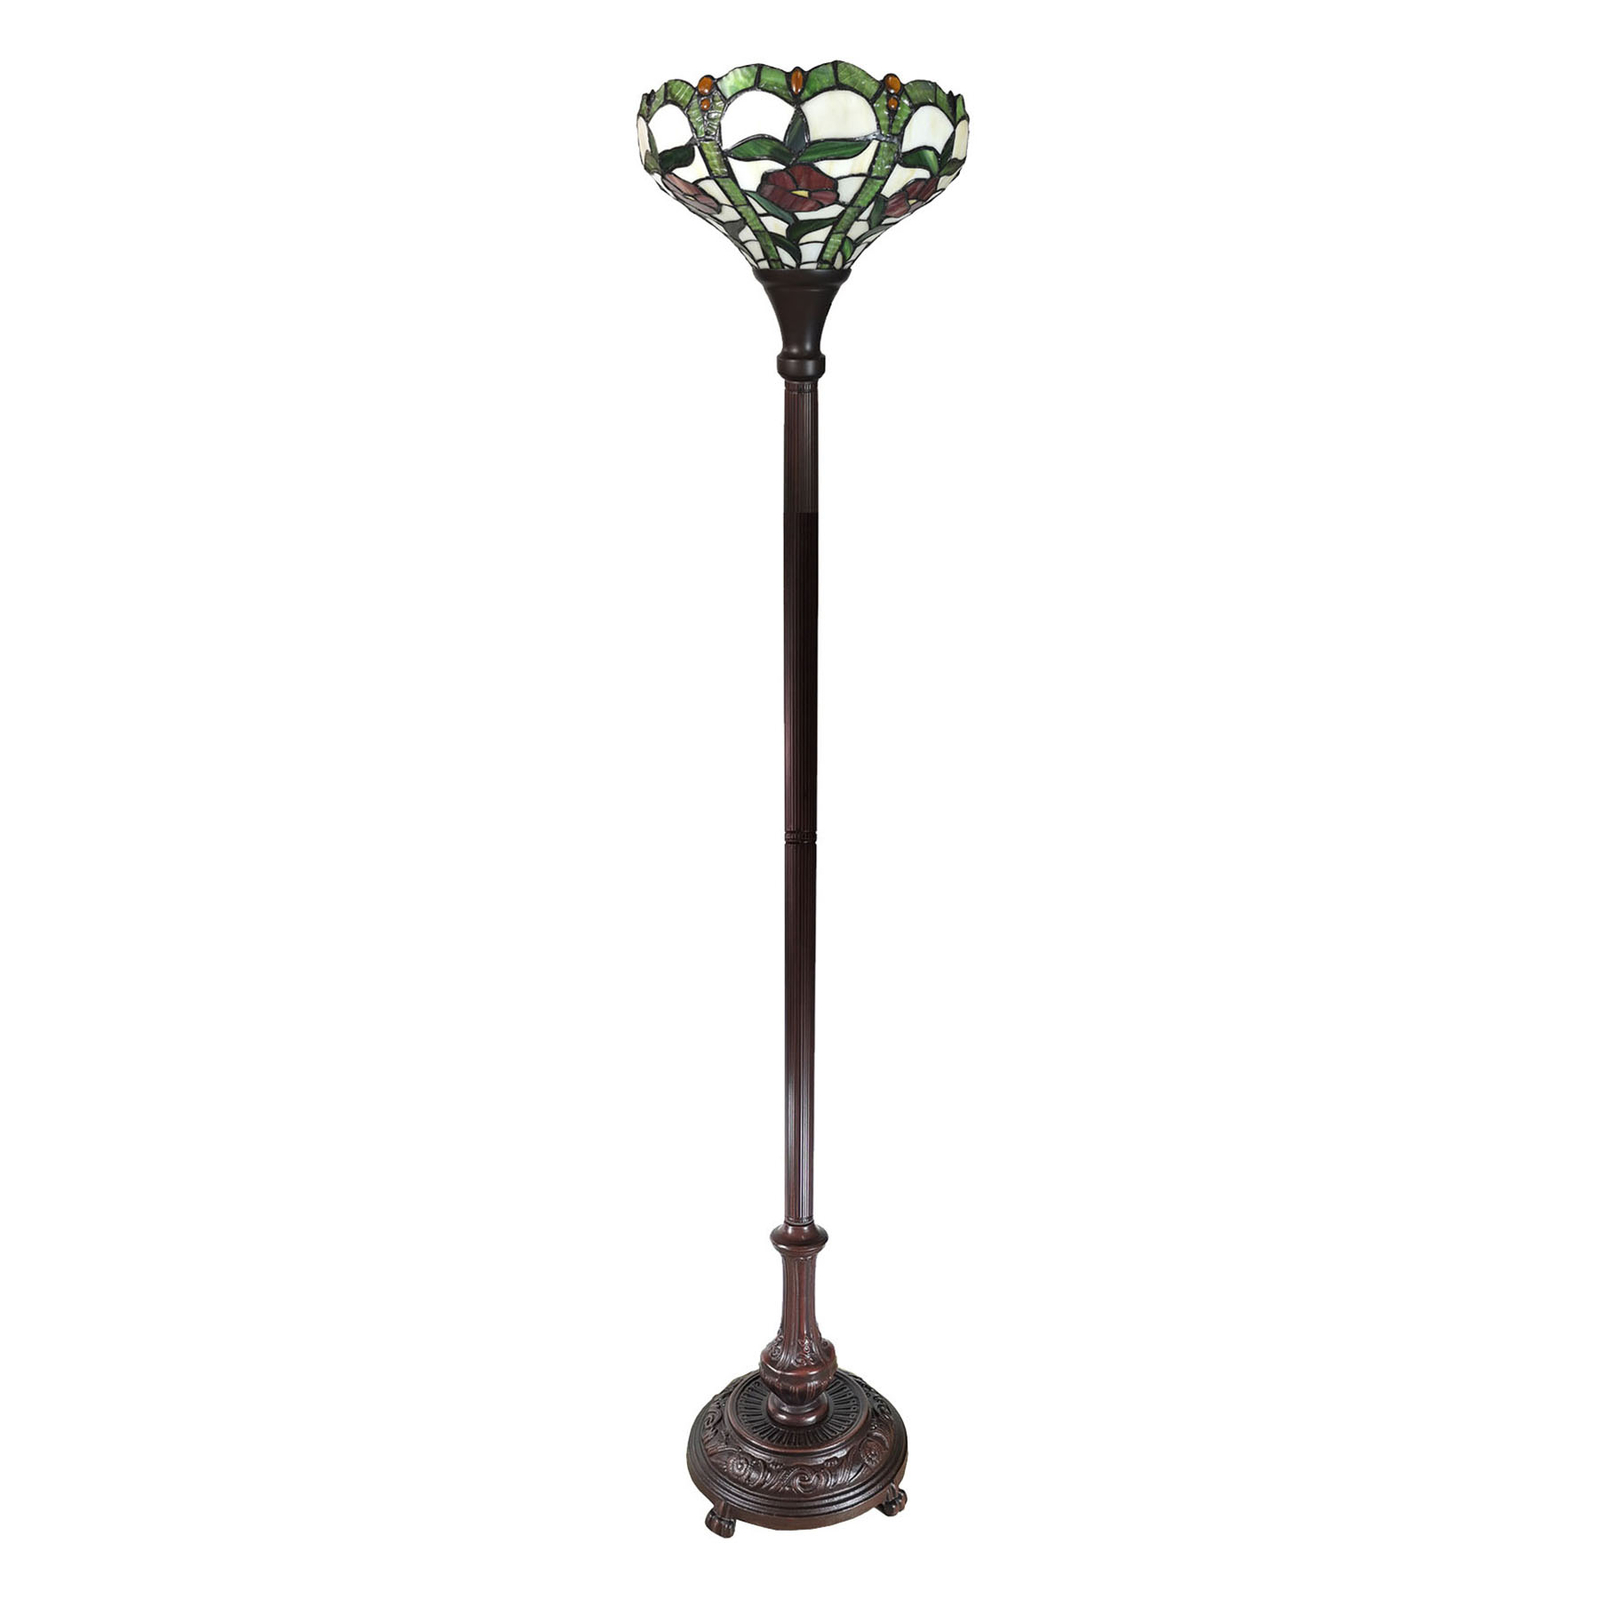 6025 gulvlampe med glasskjerm i Tiffany-utseende